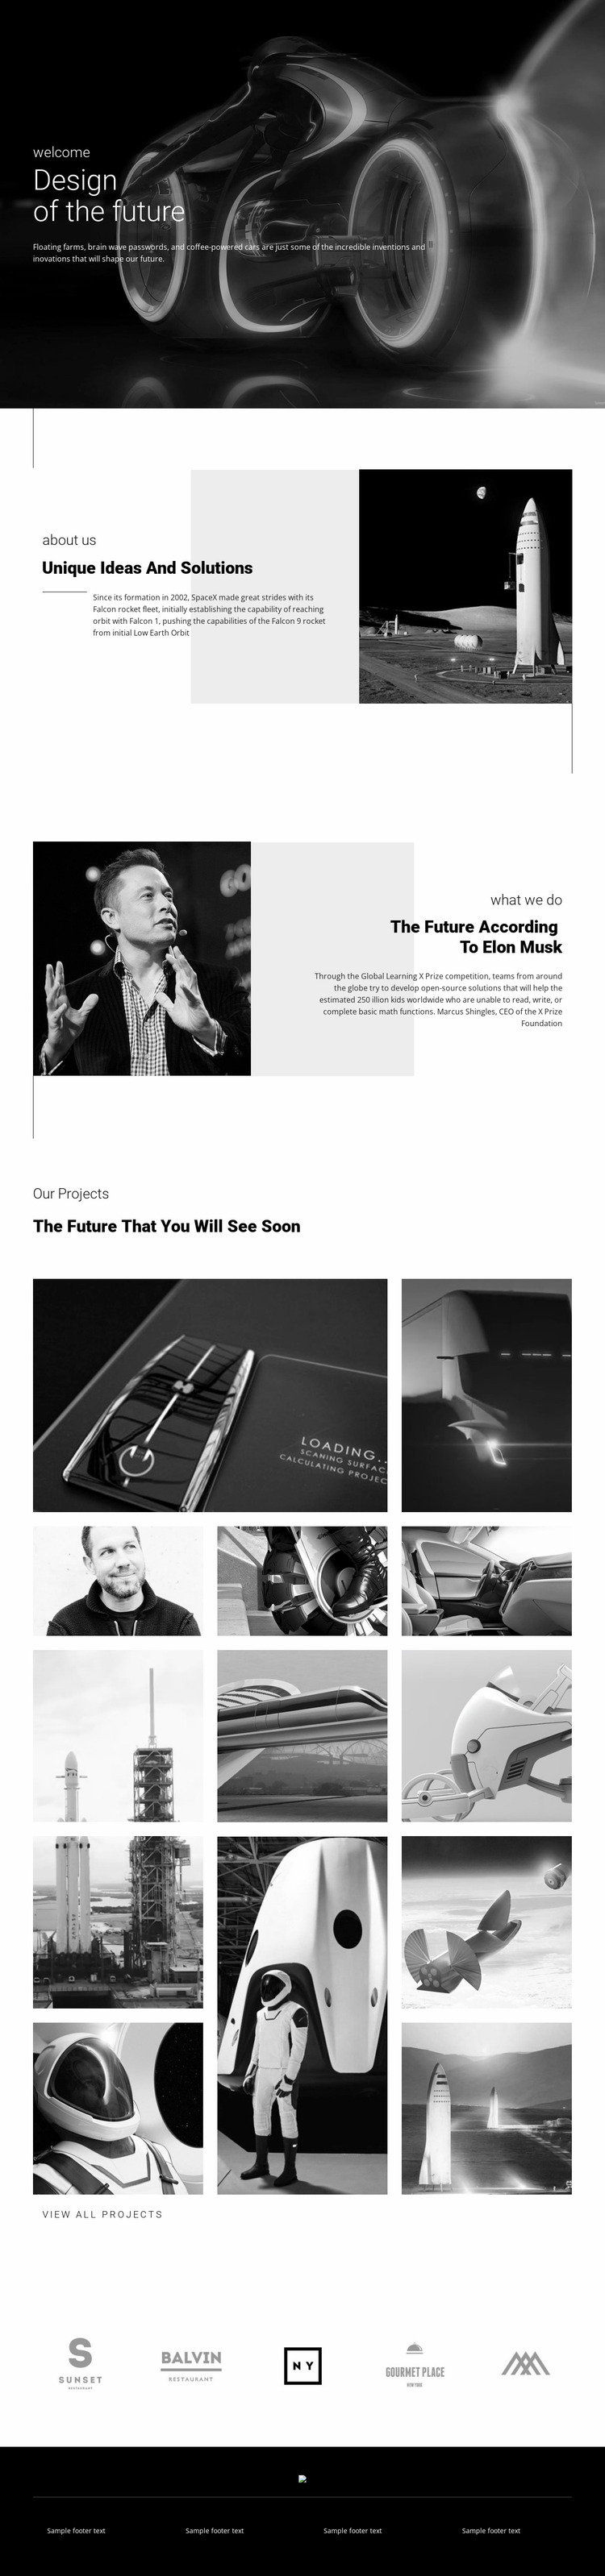 Design of future technology Website Mockup